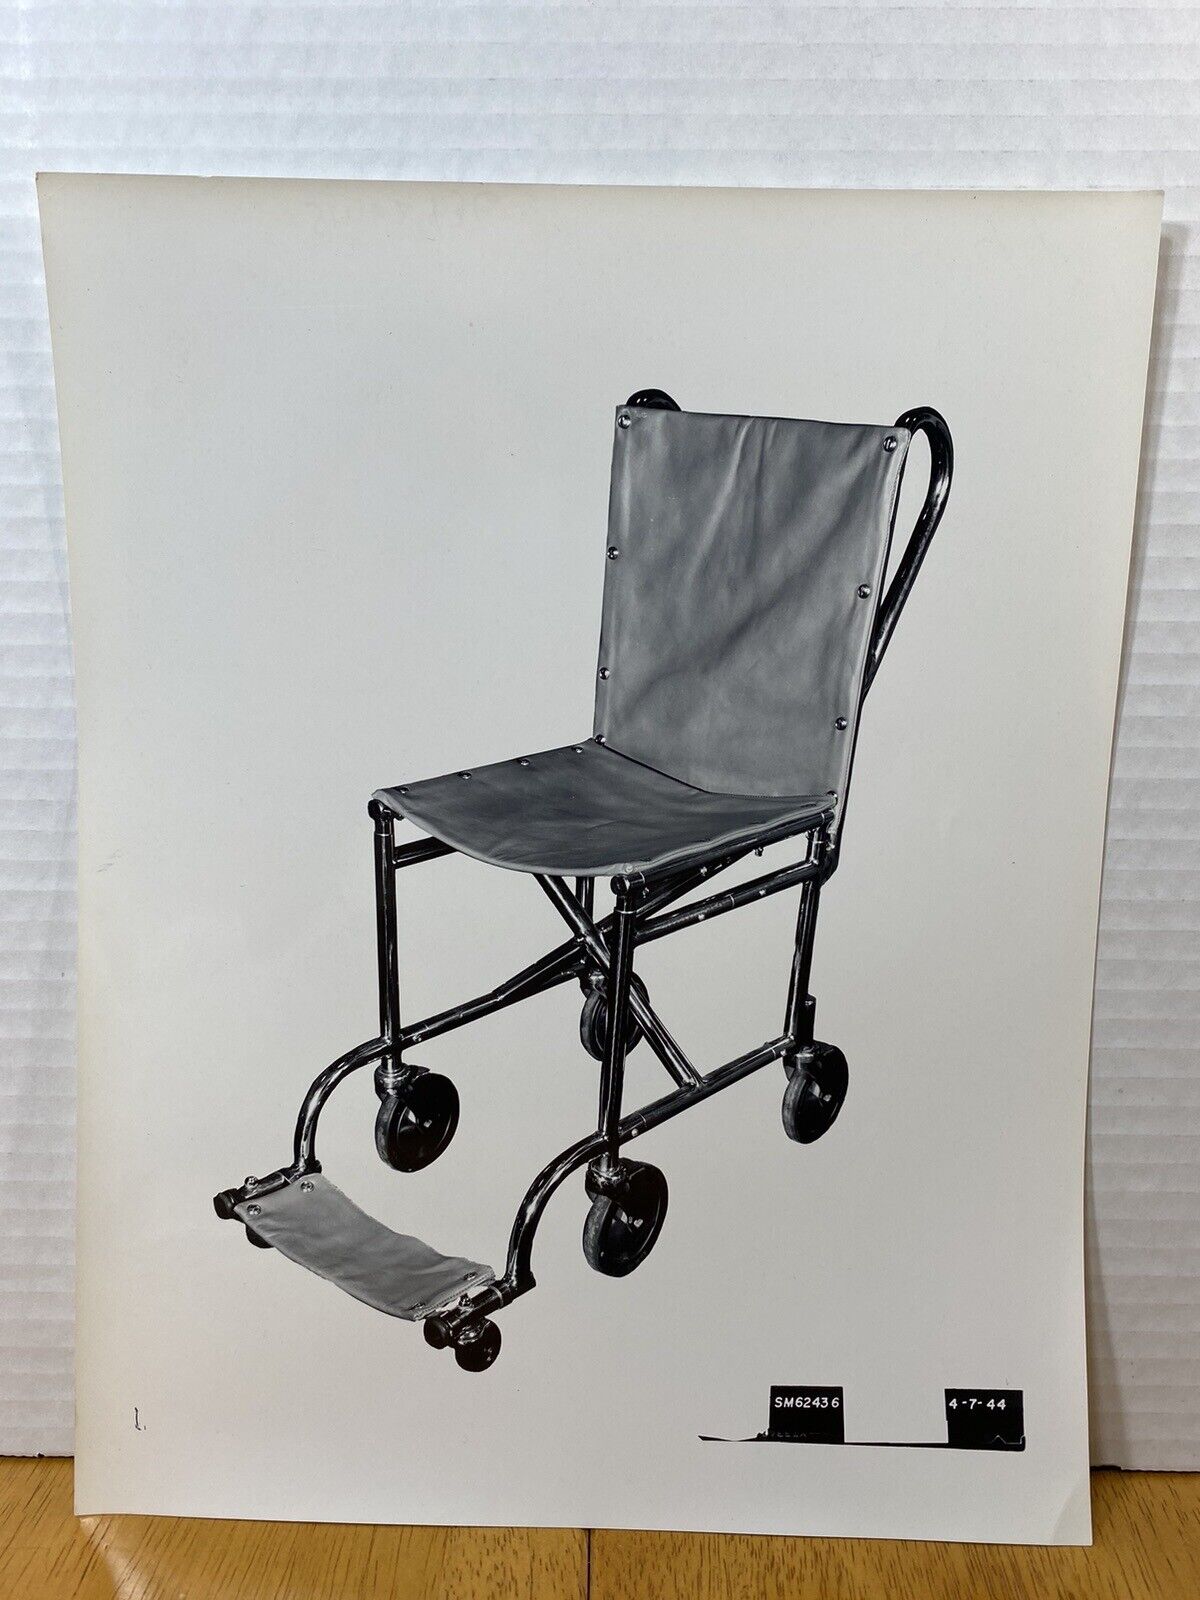 Military Wheelchair SM62436 4-7-44 Kodak Paper PHOTO PRINT